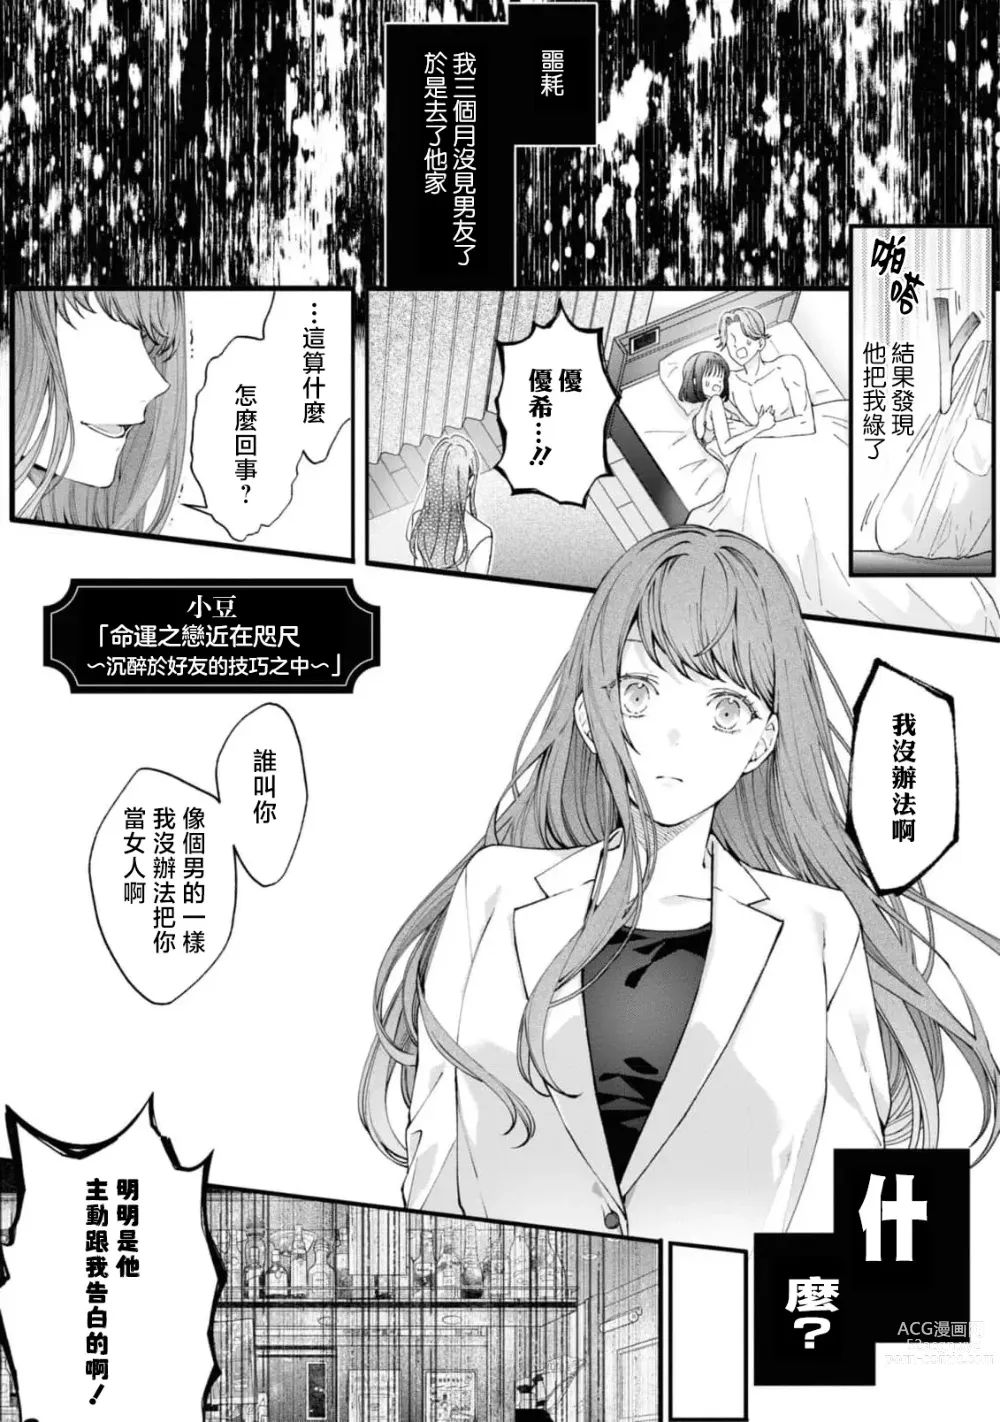 Page 2 of manga 「命运之恋近在咫尺～沉醉于好友的技巧之中～」